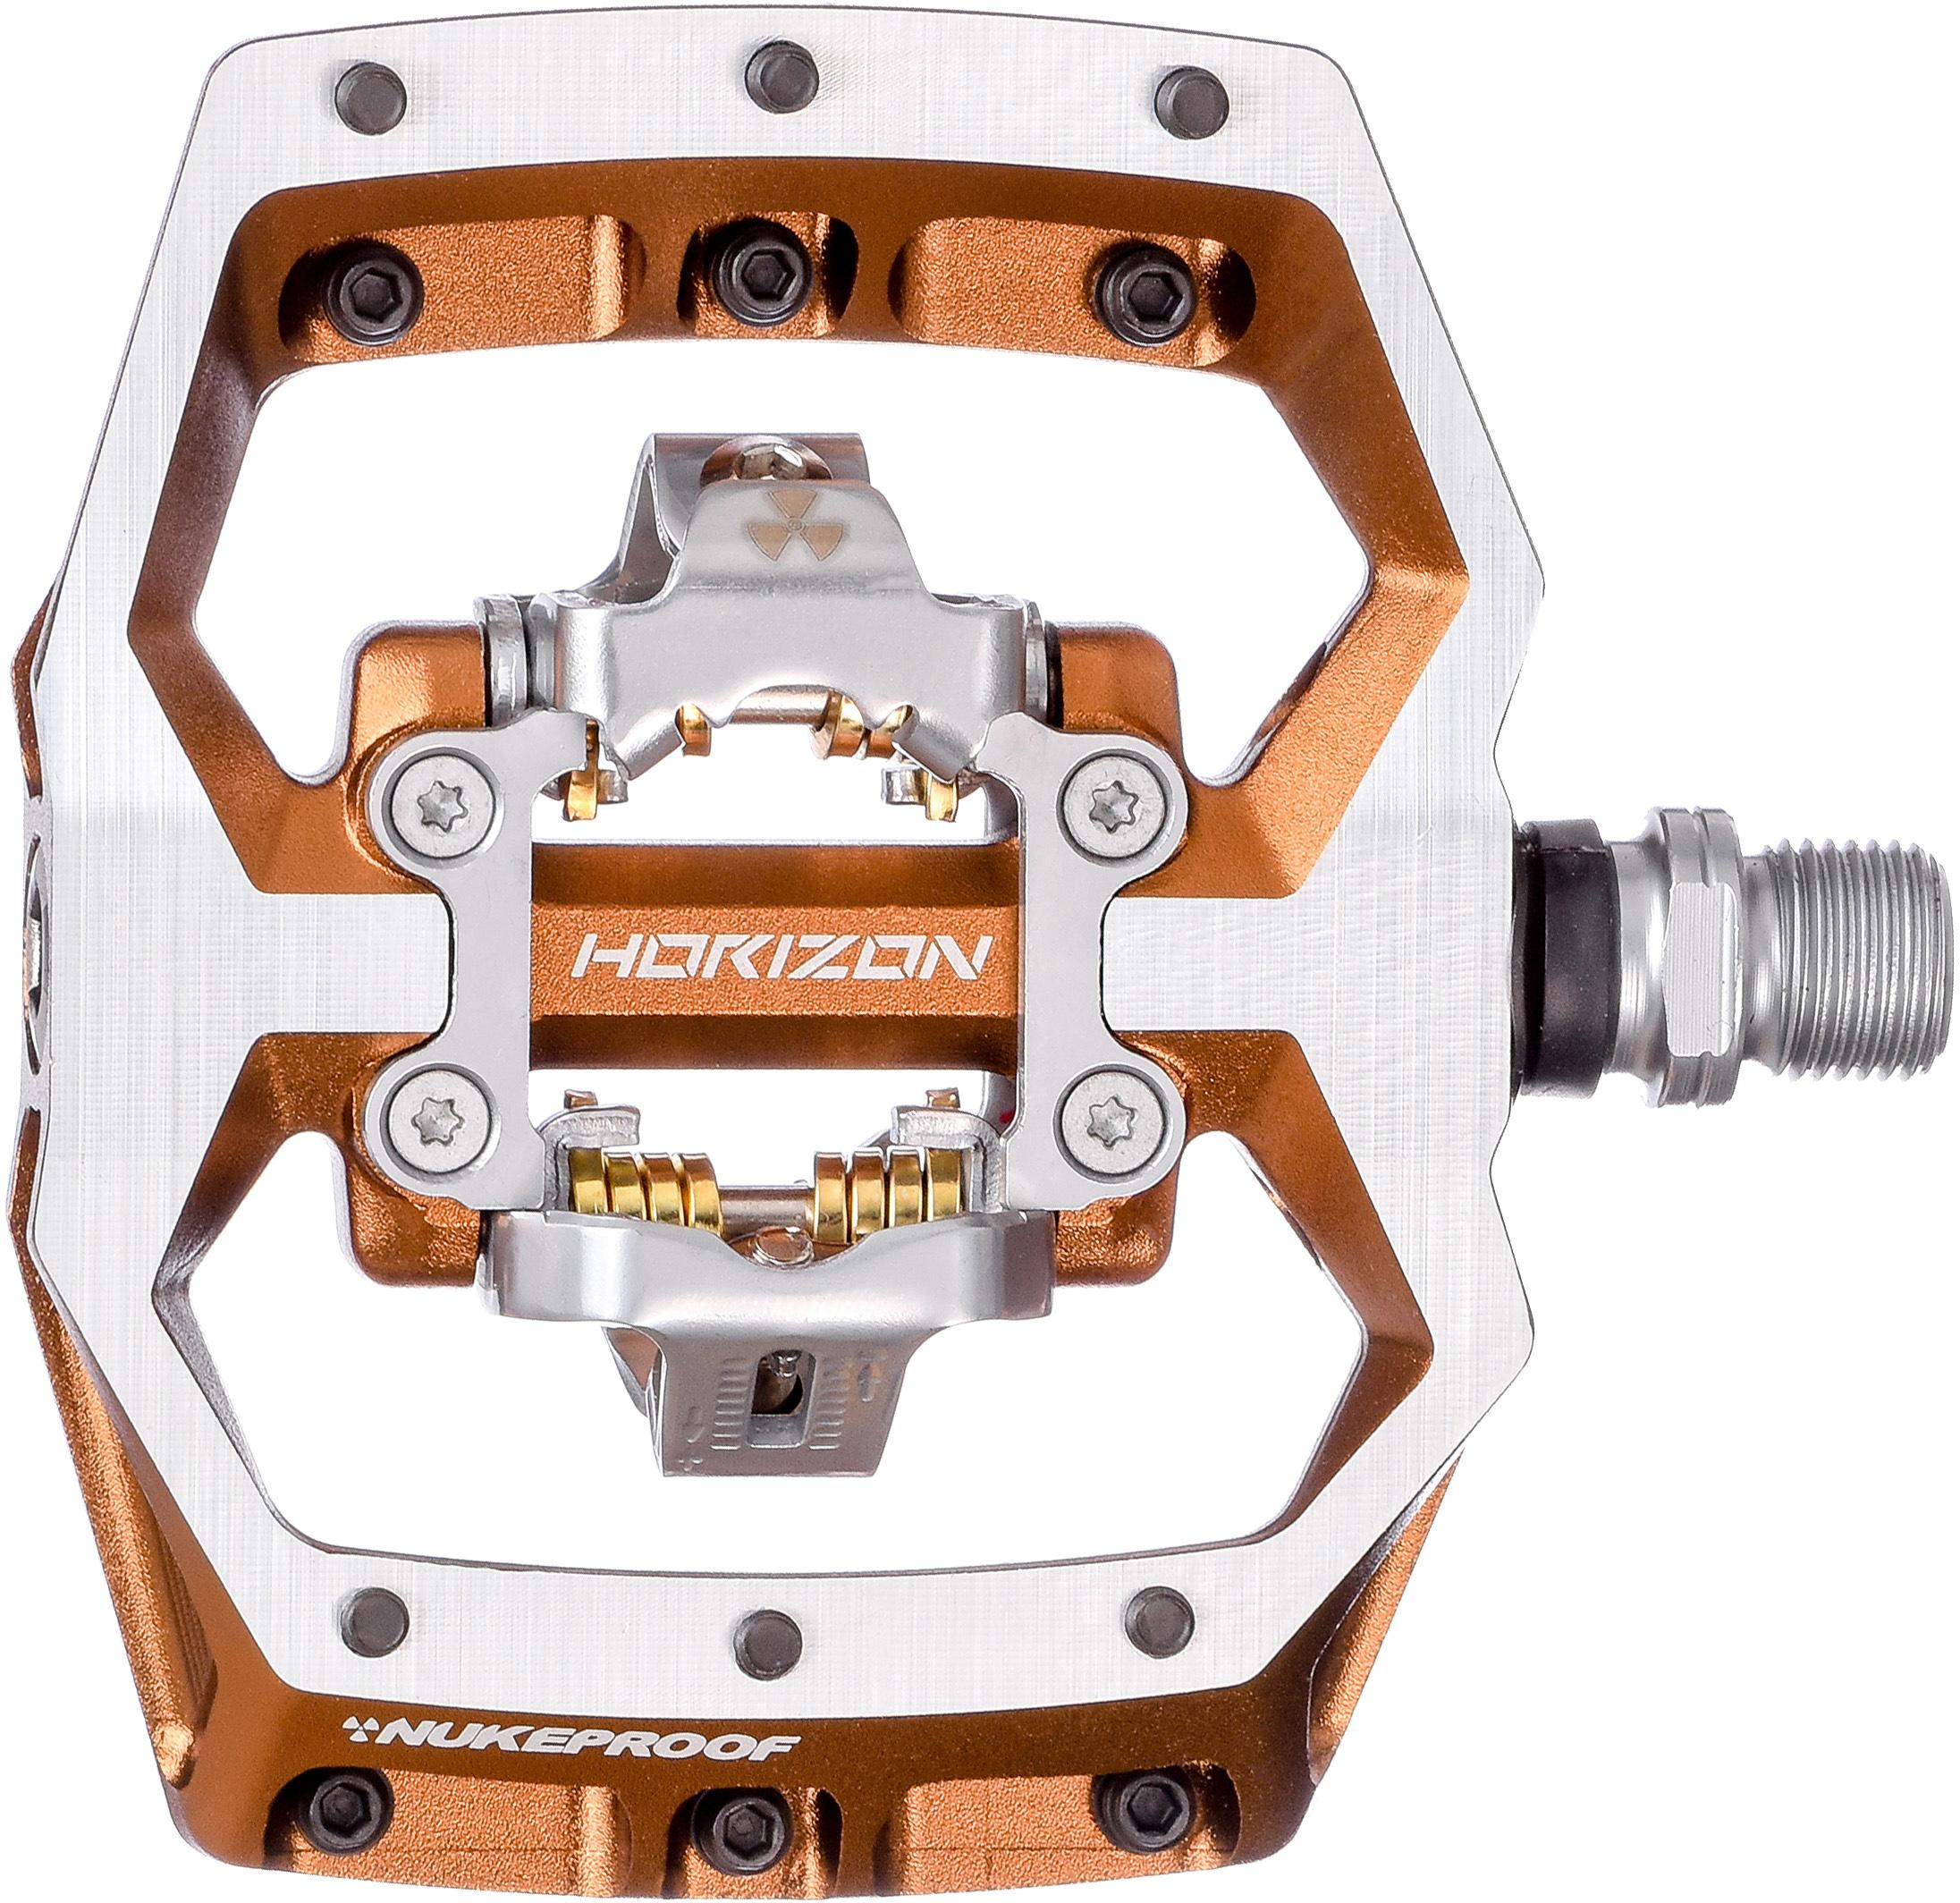 Nukeproof Horizon Cl Crmo Downhill Pedals - Copper